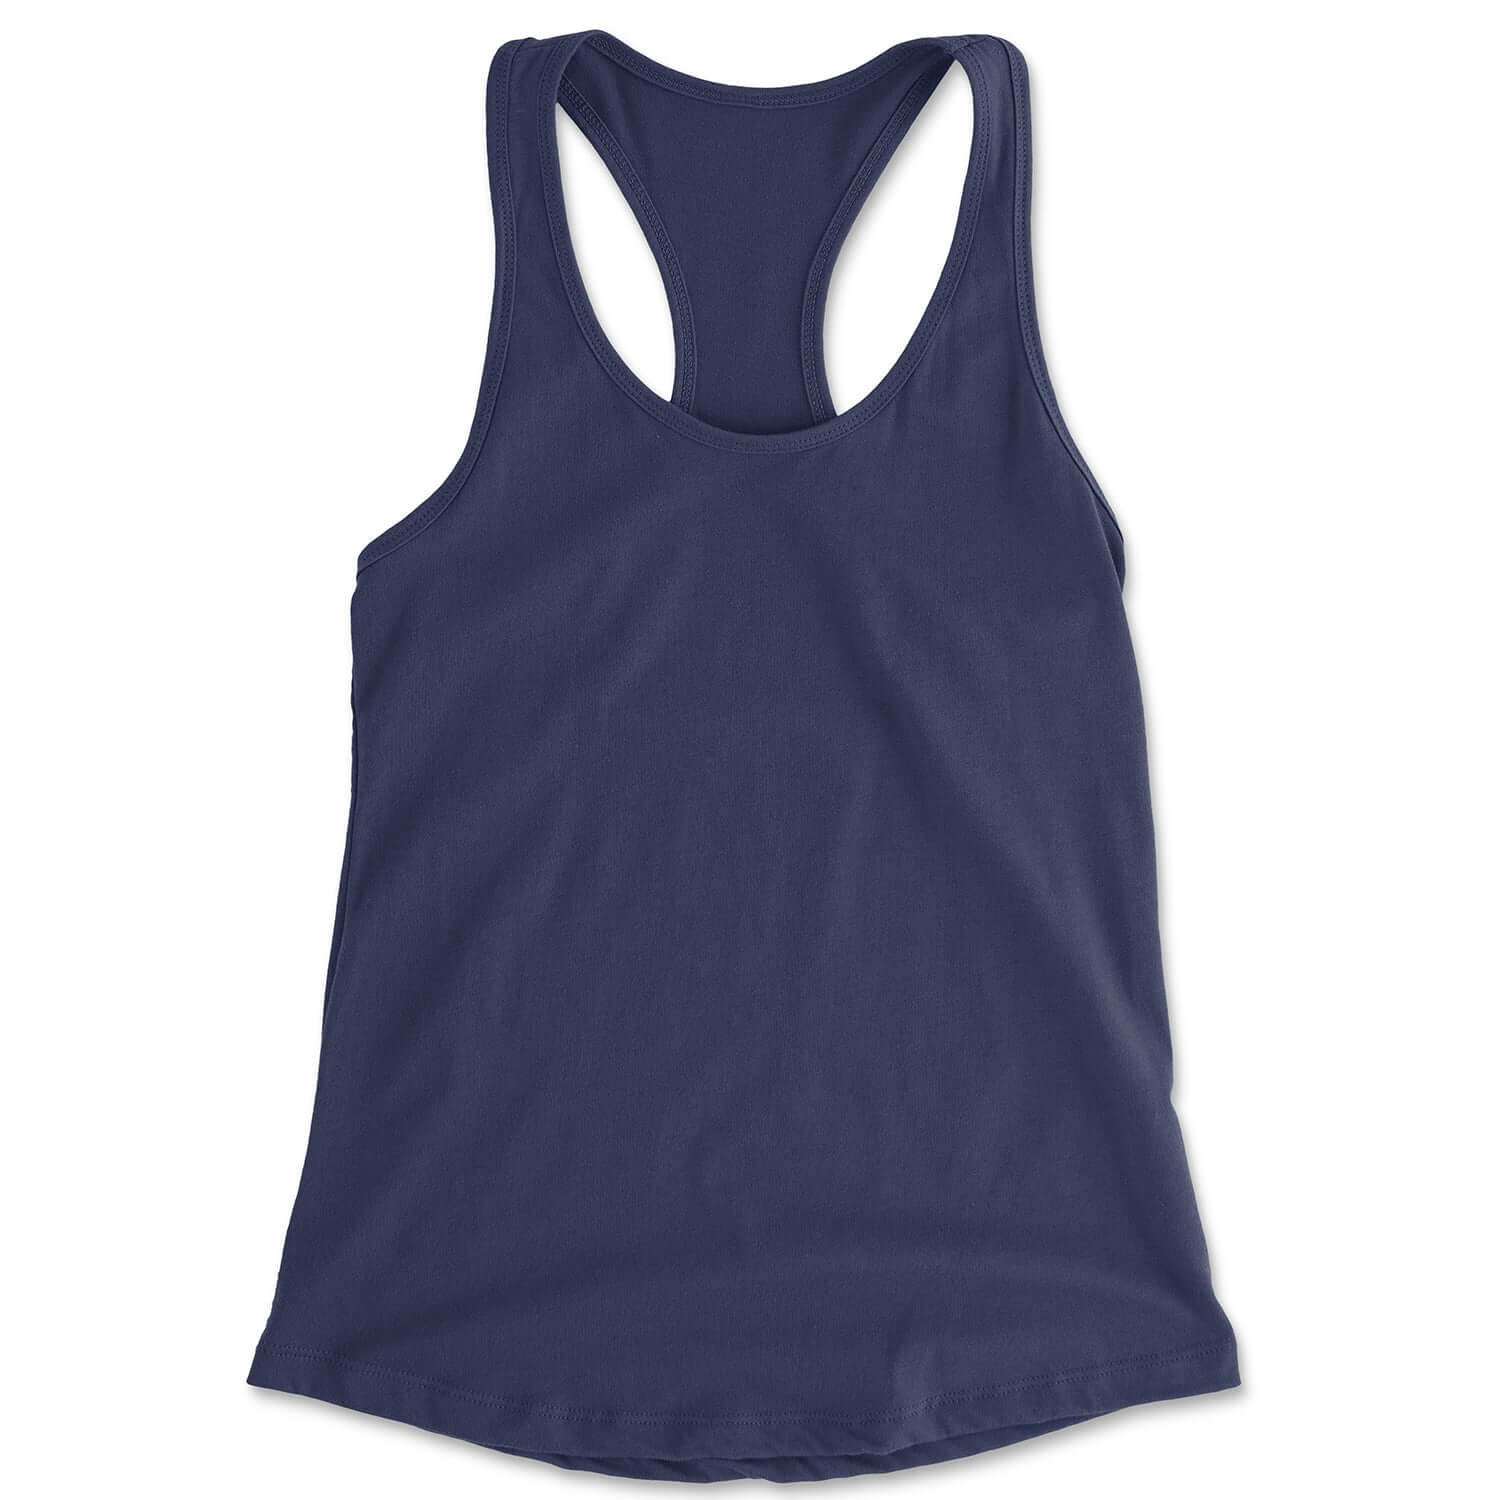 Basics - Plain Blank Racerback Tank Top for Women blank, clothing, plain, tshirts by Expression Tees